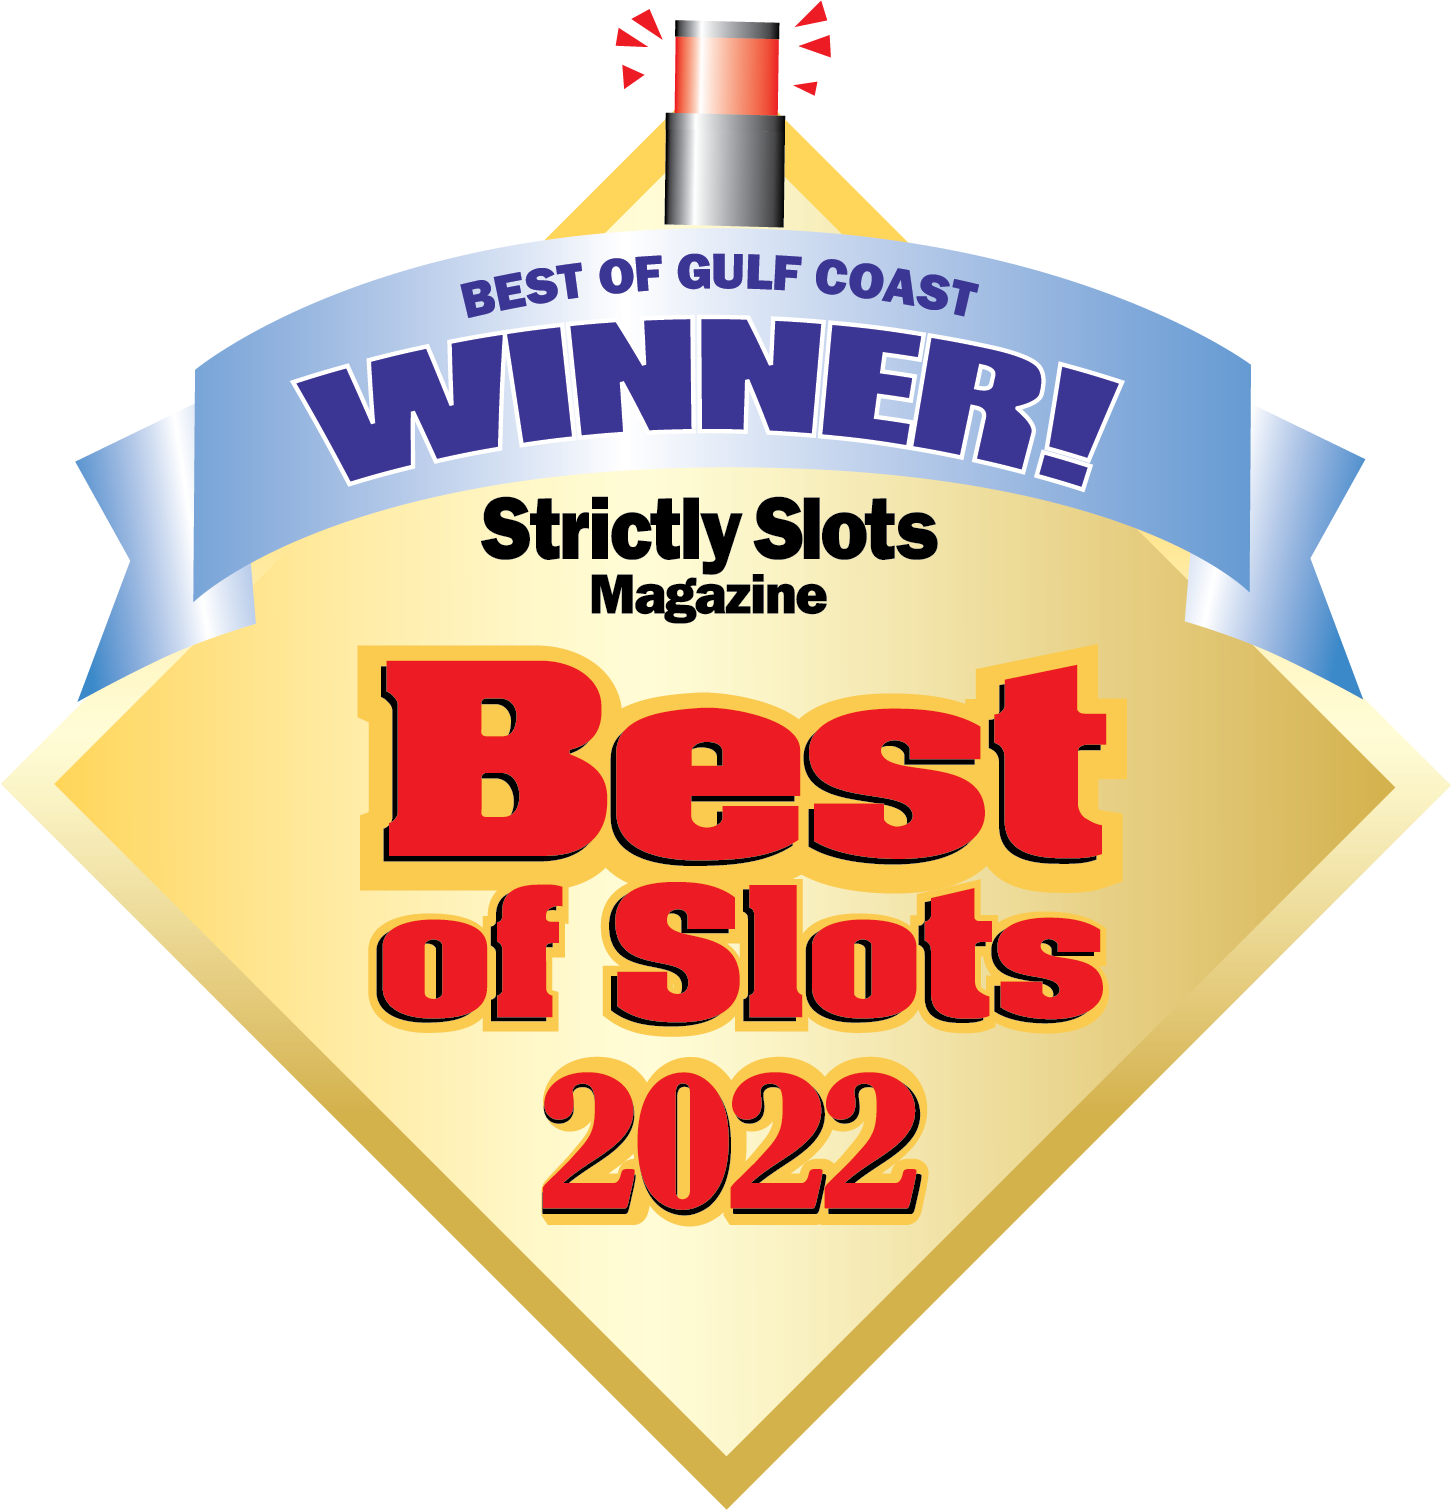 Strictly Slots Best of Slots in 2022 at Scarlet Pearl Casino Resort